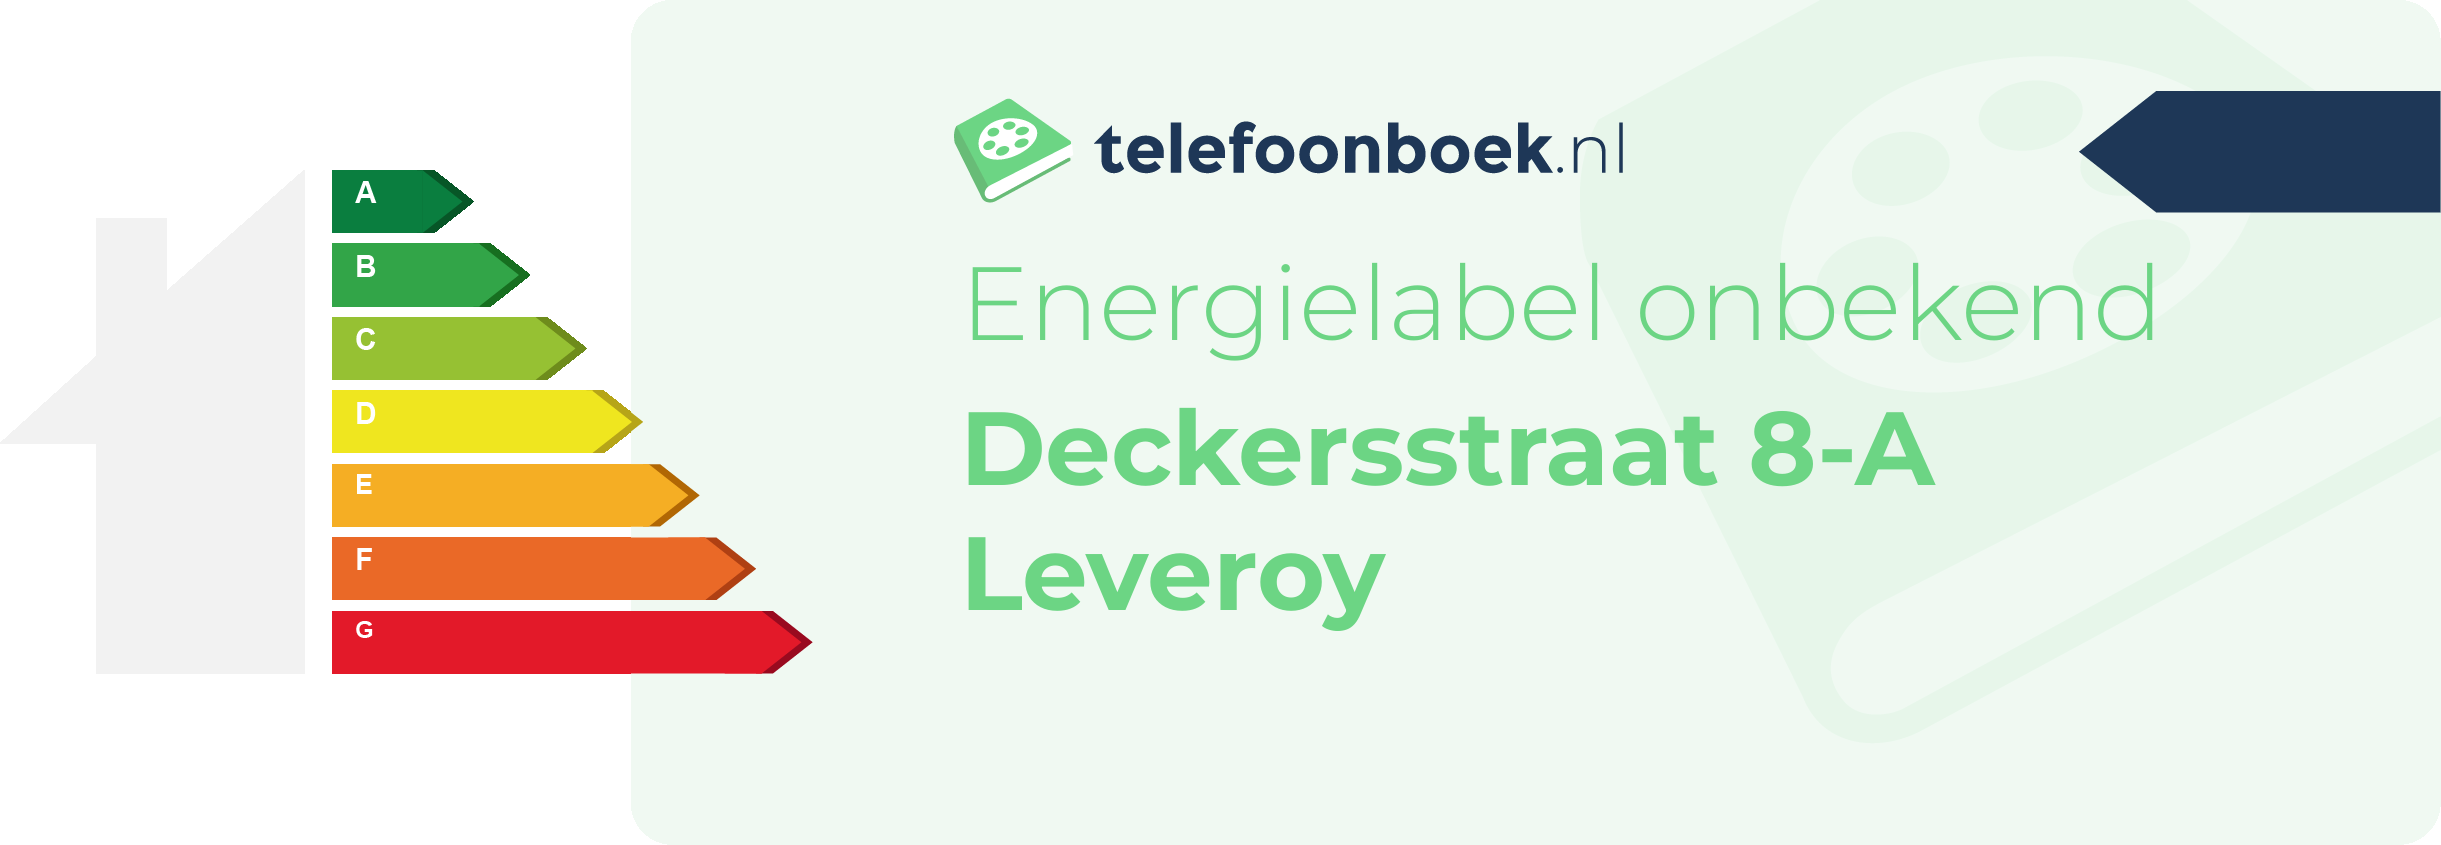 Energielabel Deckersstraat 8-A Leveroy